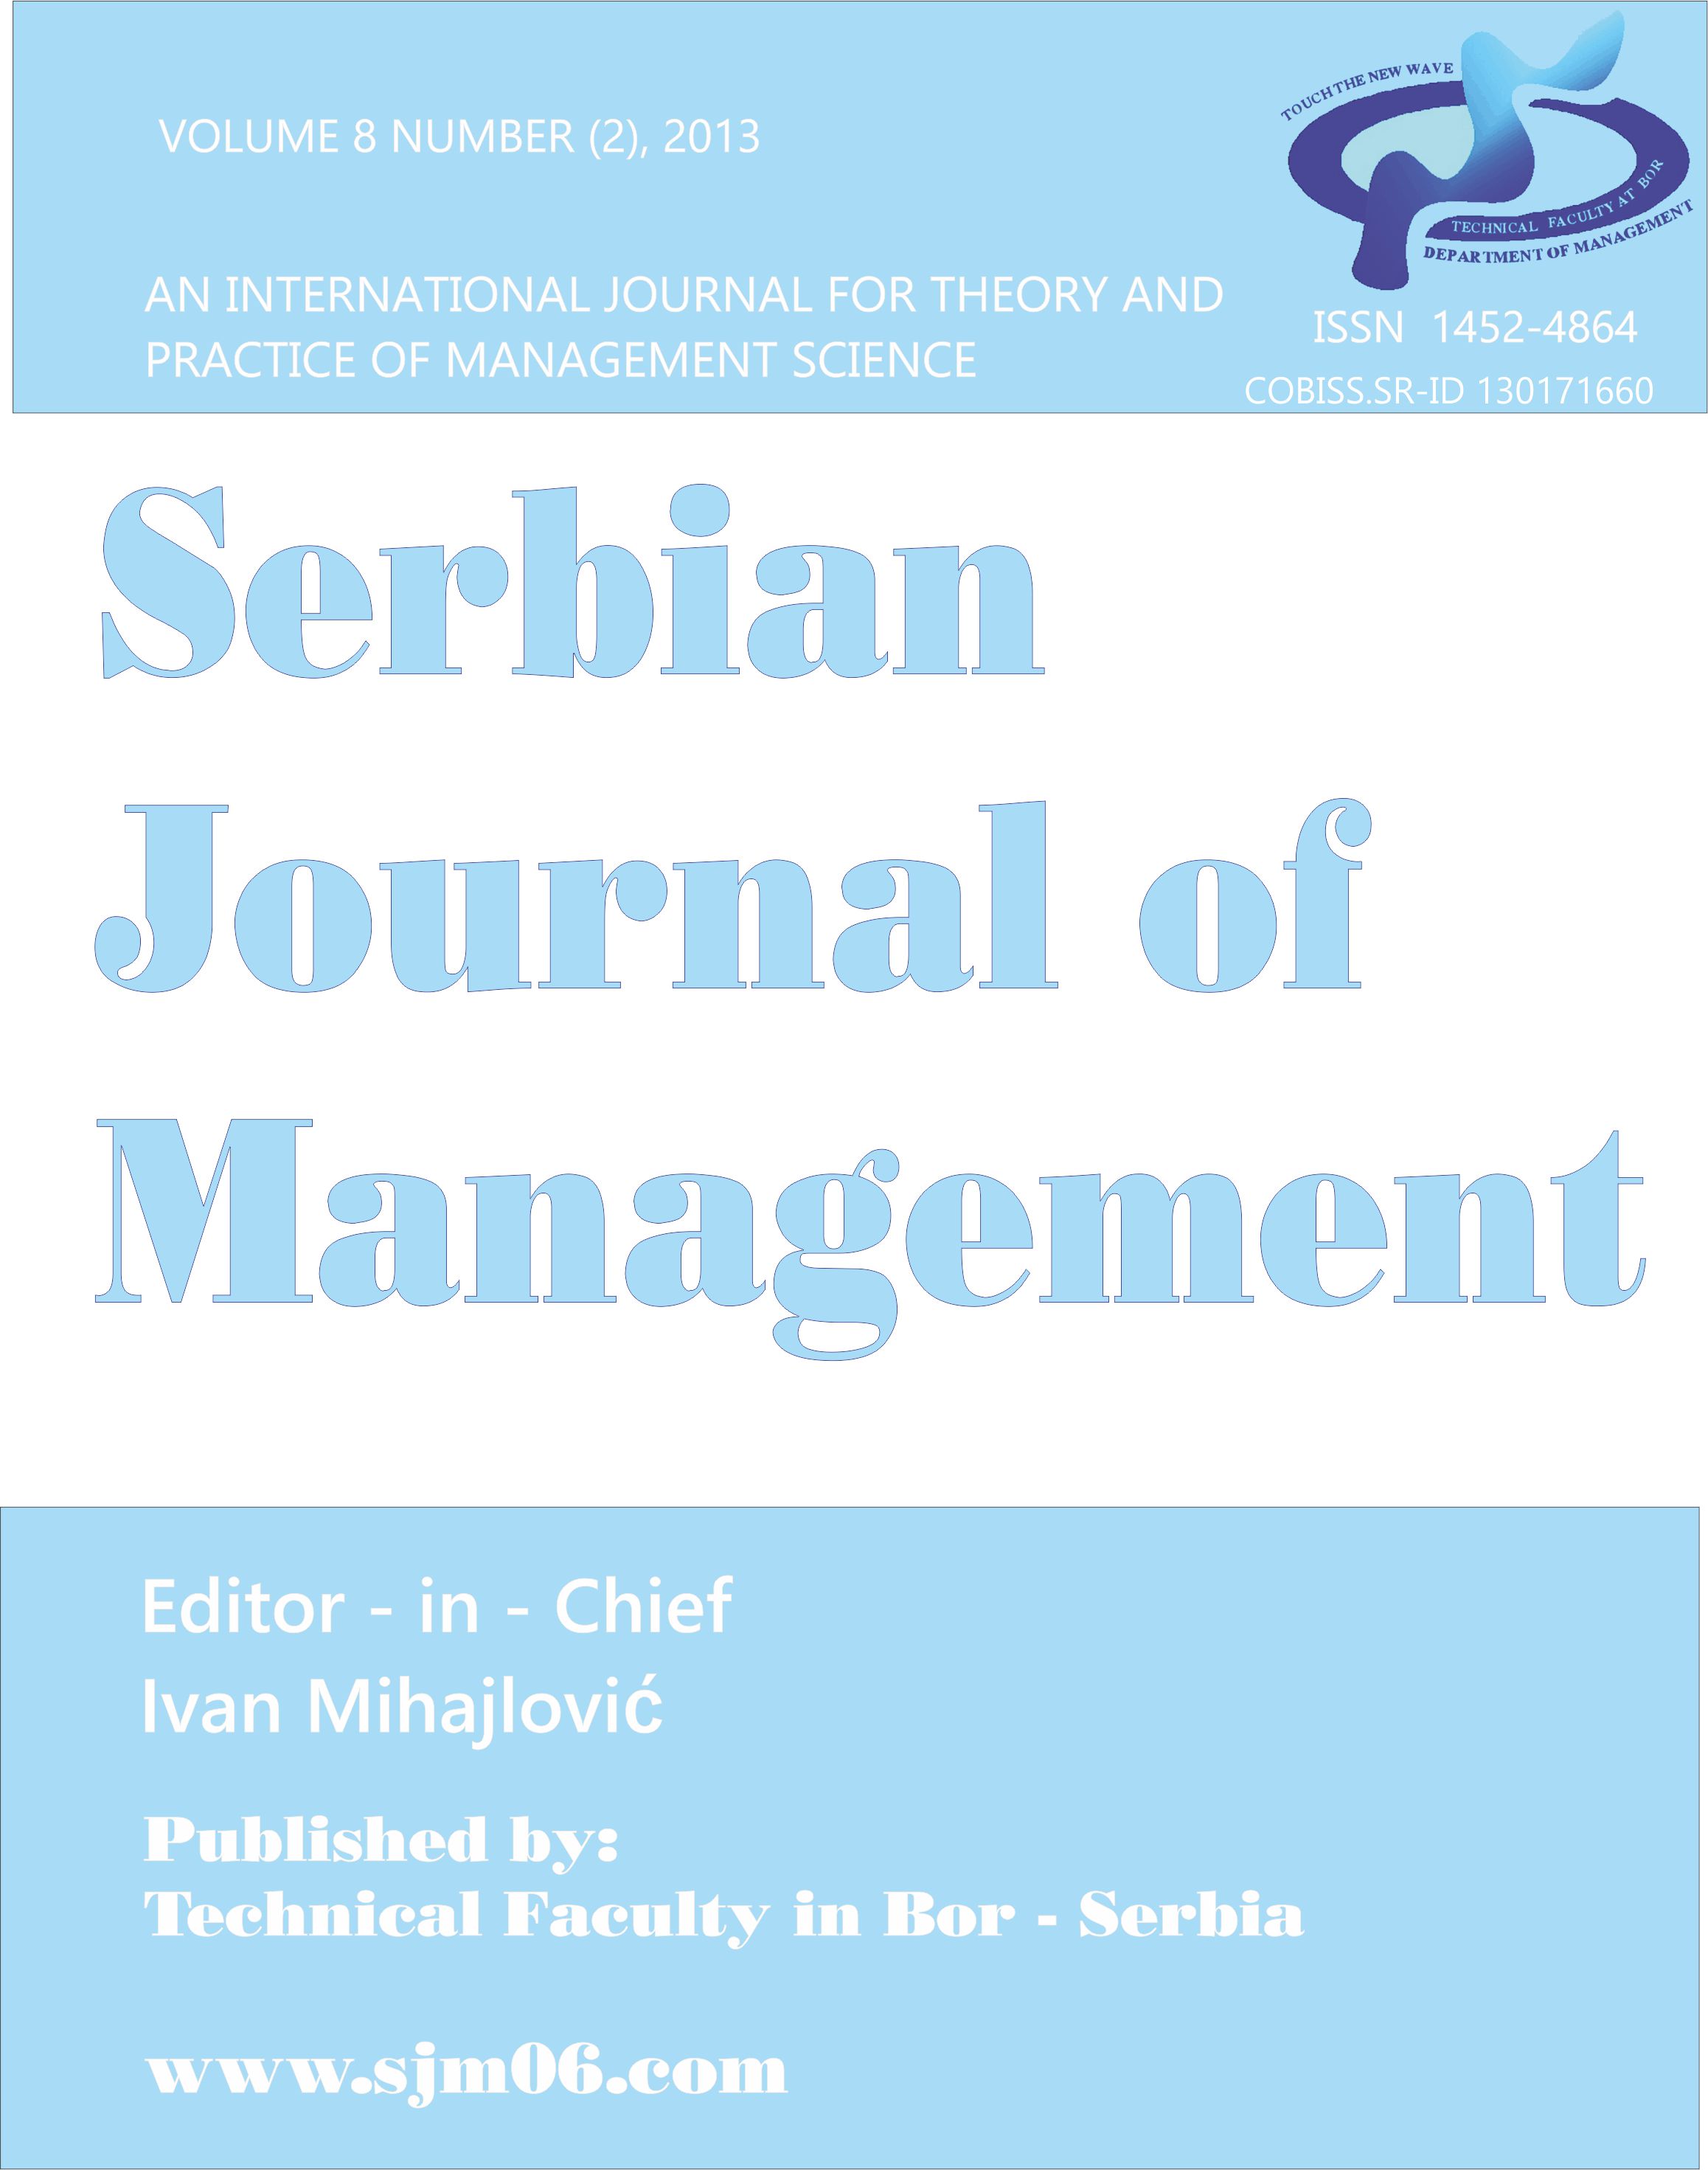 Serbian Journal of Management - Volume 8 - Issue 1 - 2013